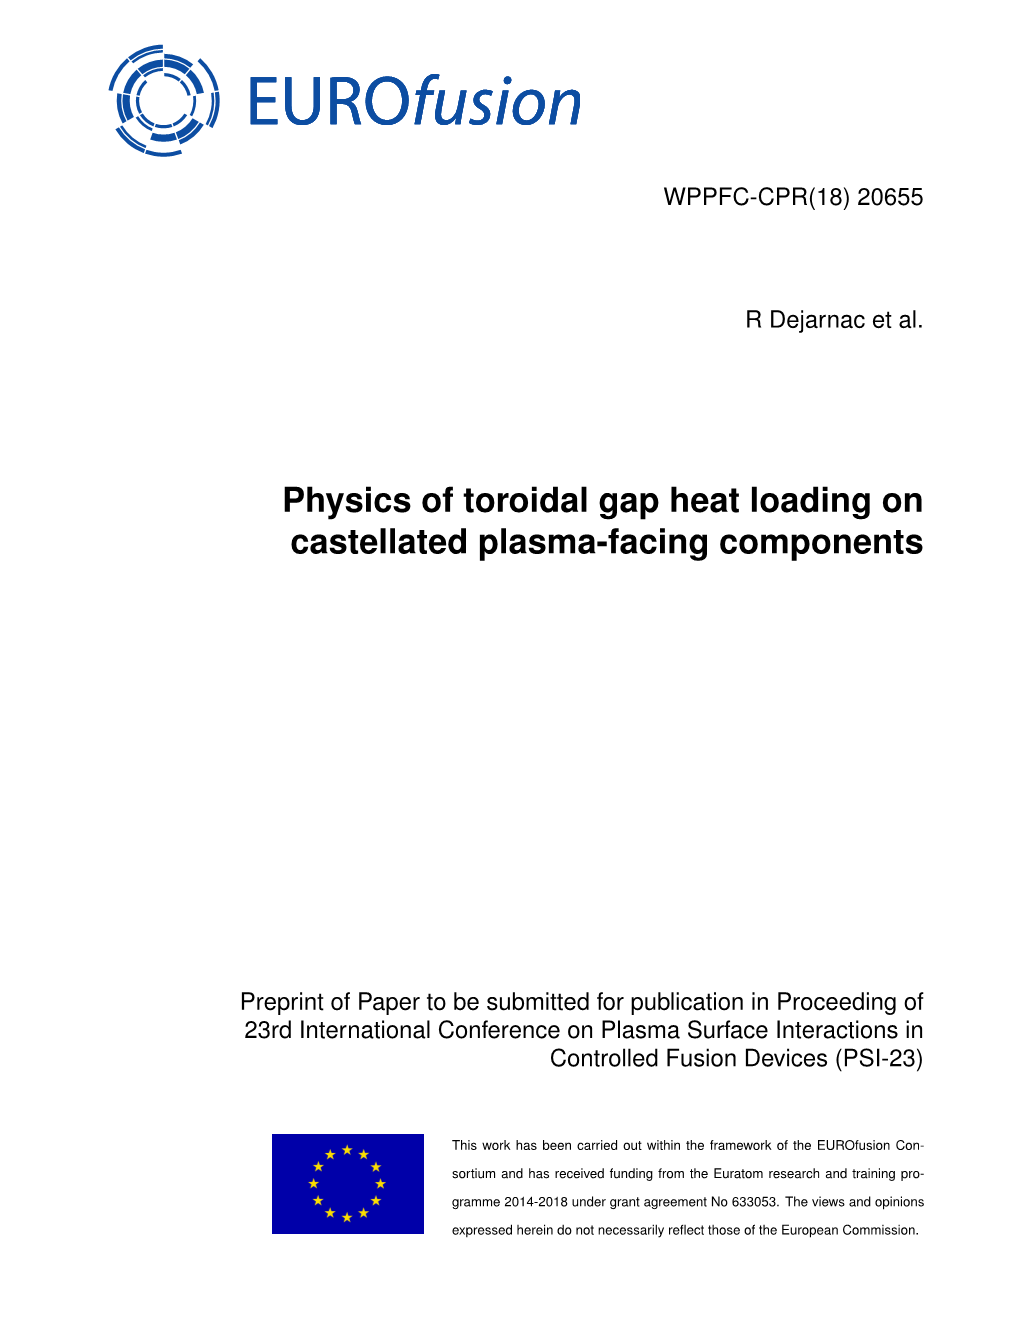 Physics of Toroidal Gap Heat Loading on Castellated Plasma-Facing Components